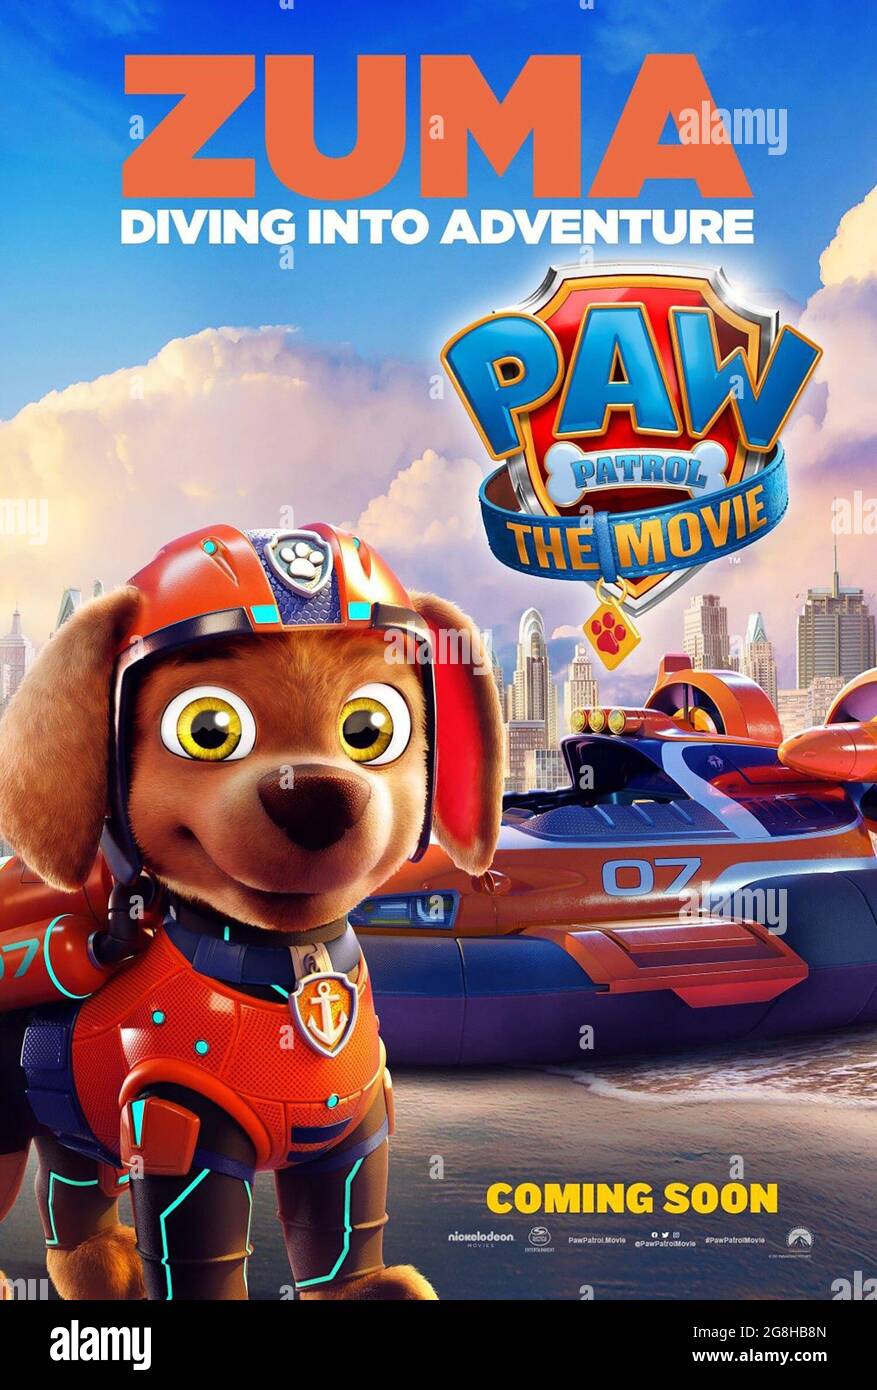 Movie poster for PAW PATROL at cinema across England UK Stock Photo - Alamy